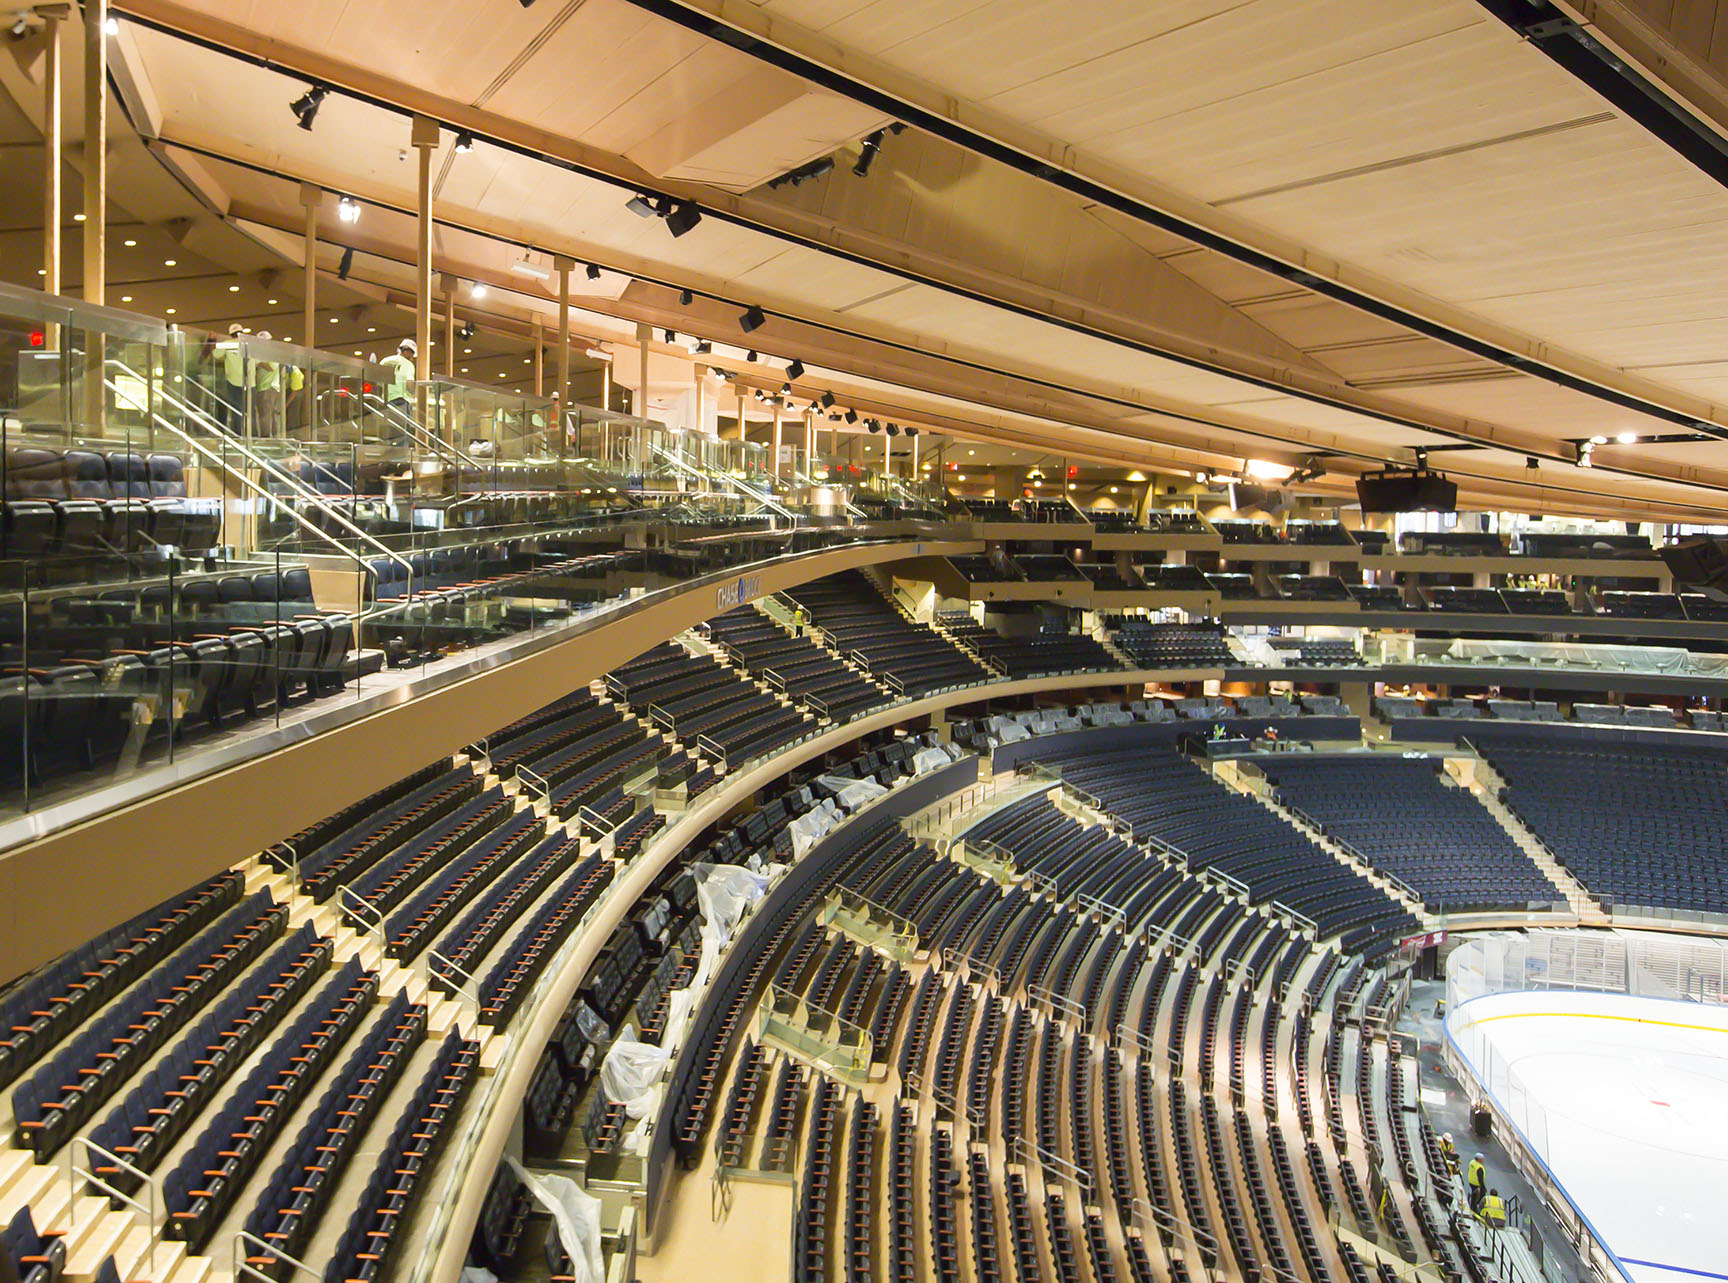 Madison Square Garden Guide - CBS New York